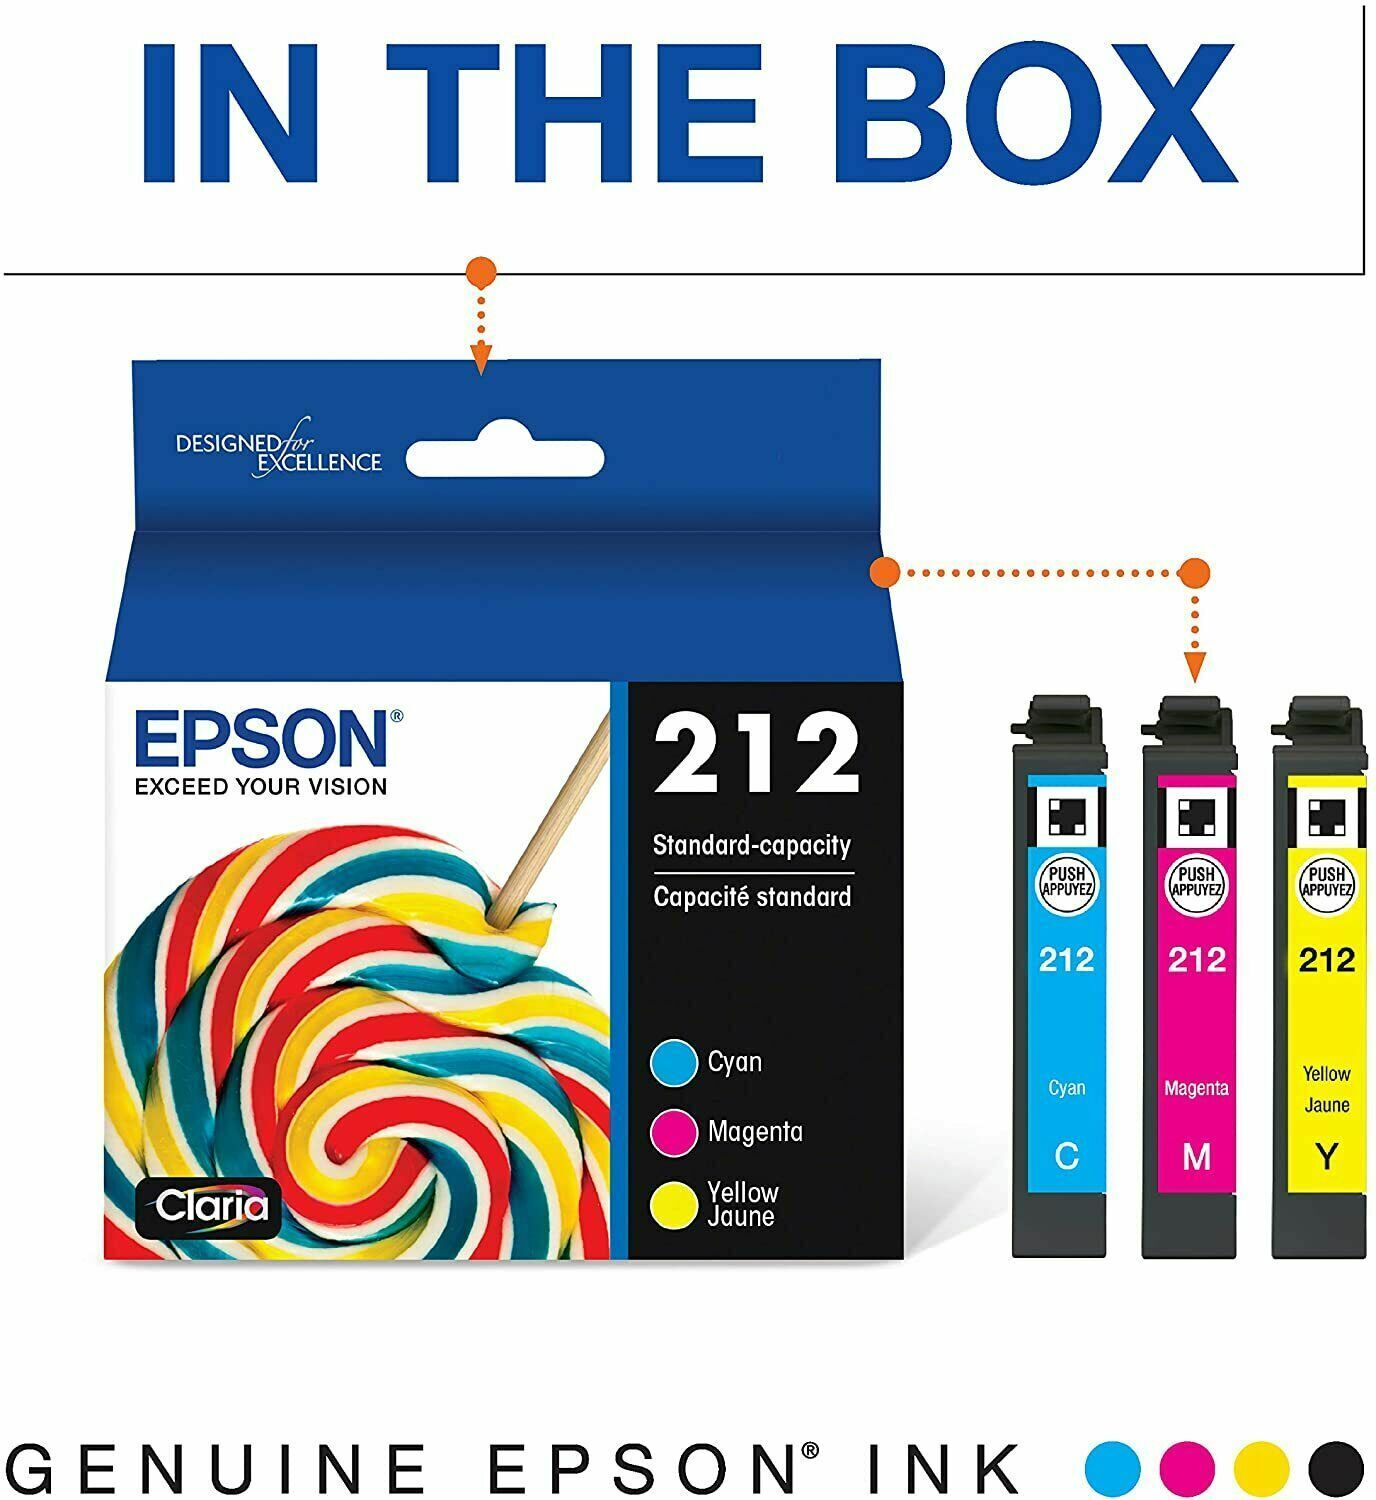 Genuine Epson 212 Color Ink Cartridge for 4104 5100 5105 WF2830/2850 Printer-3PK